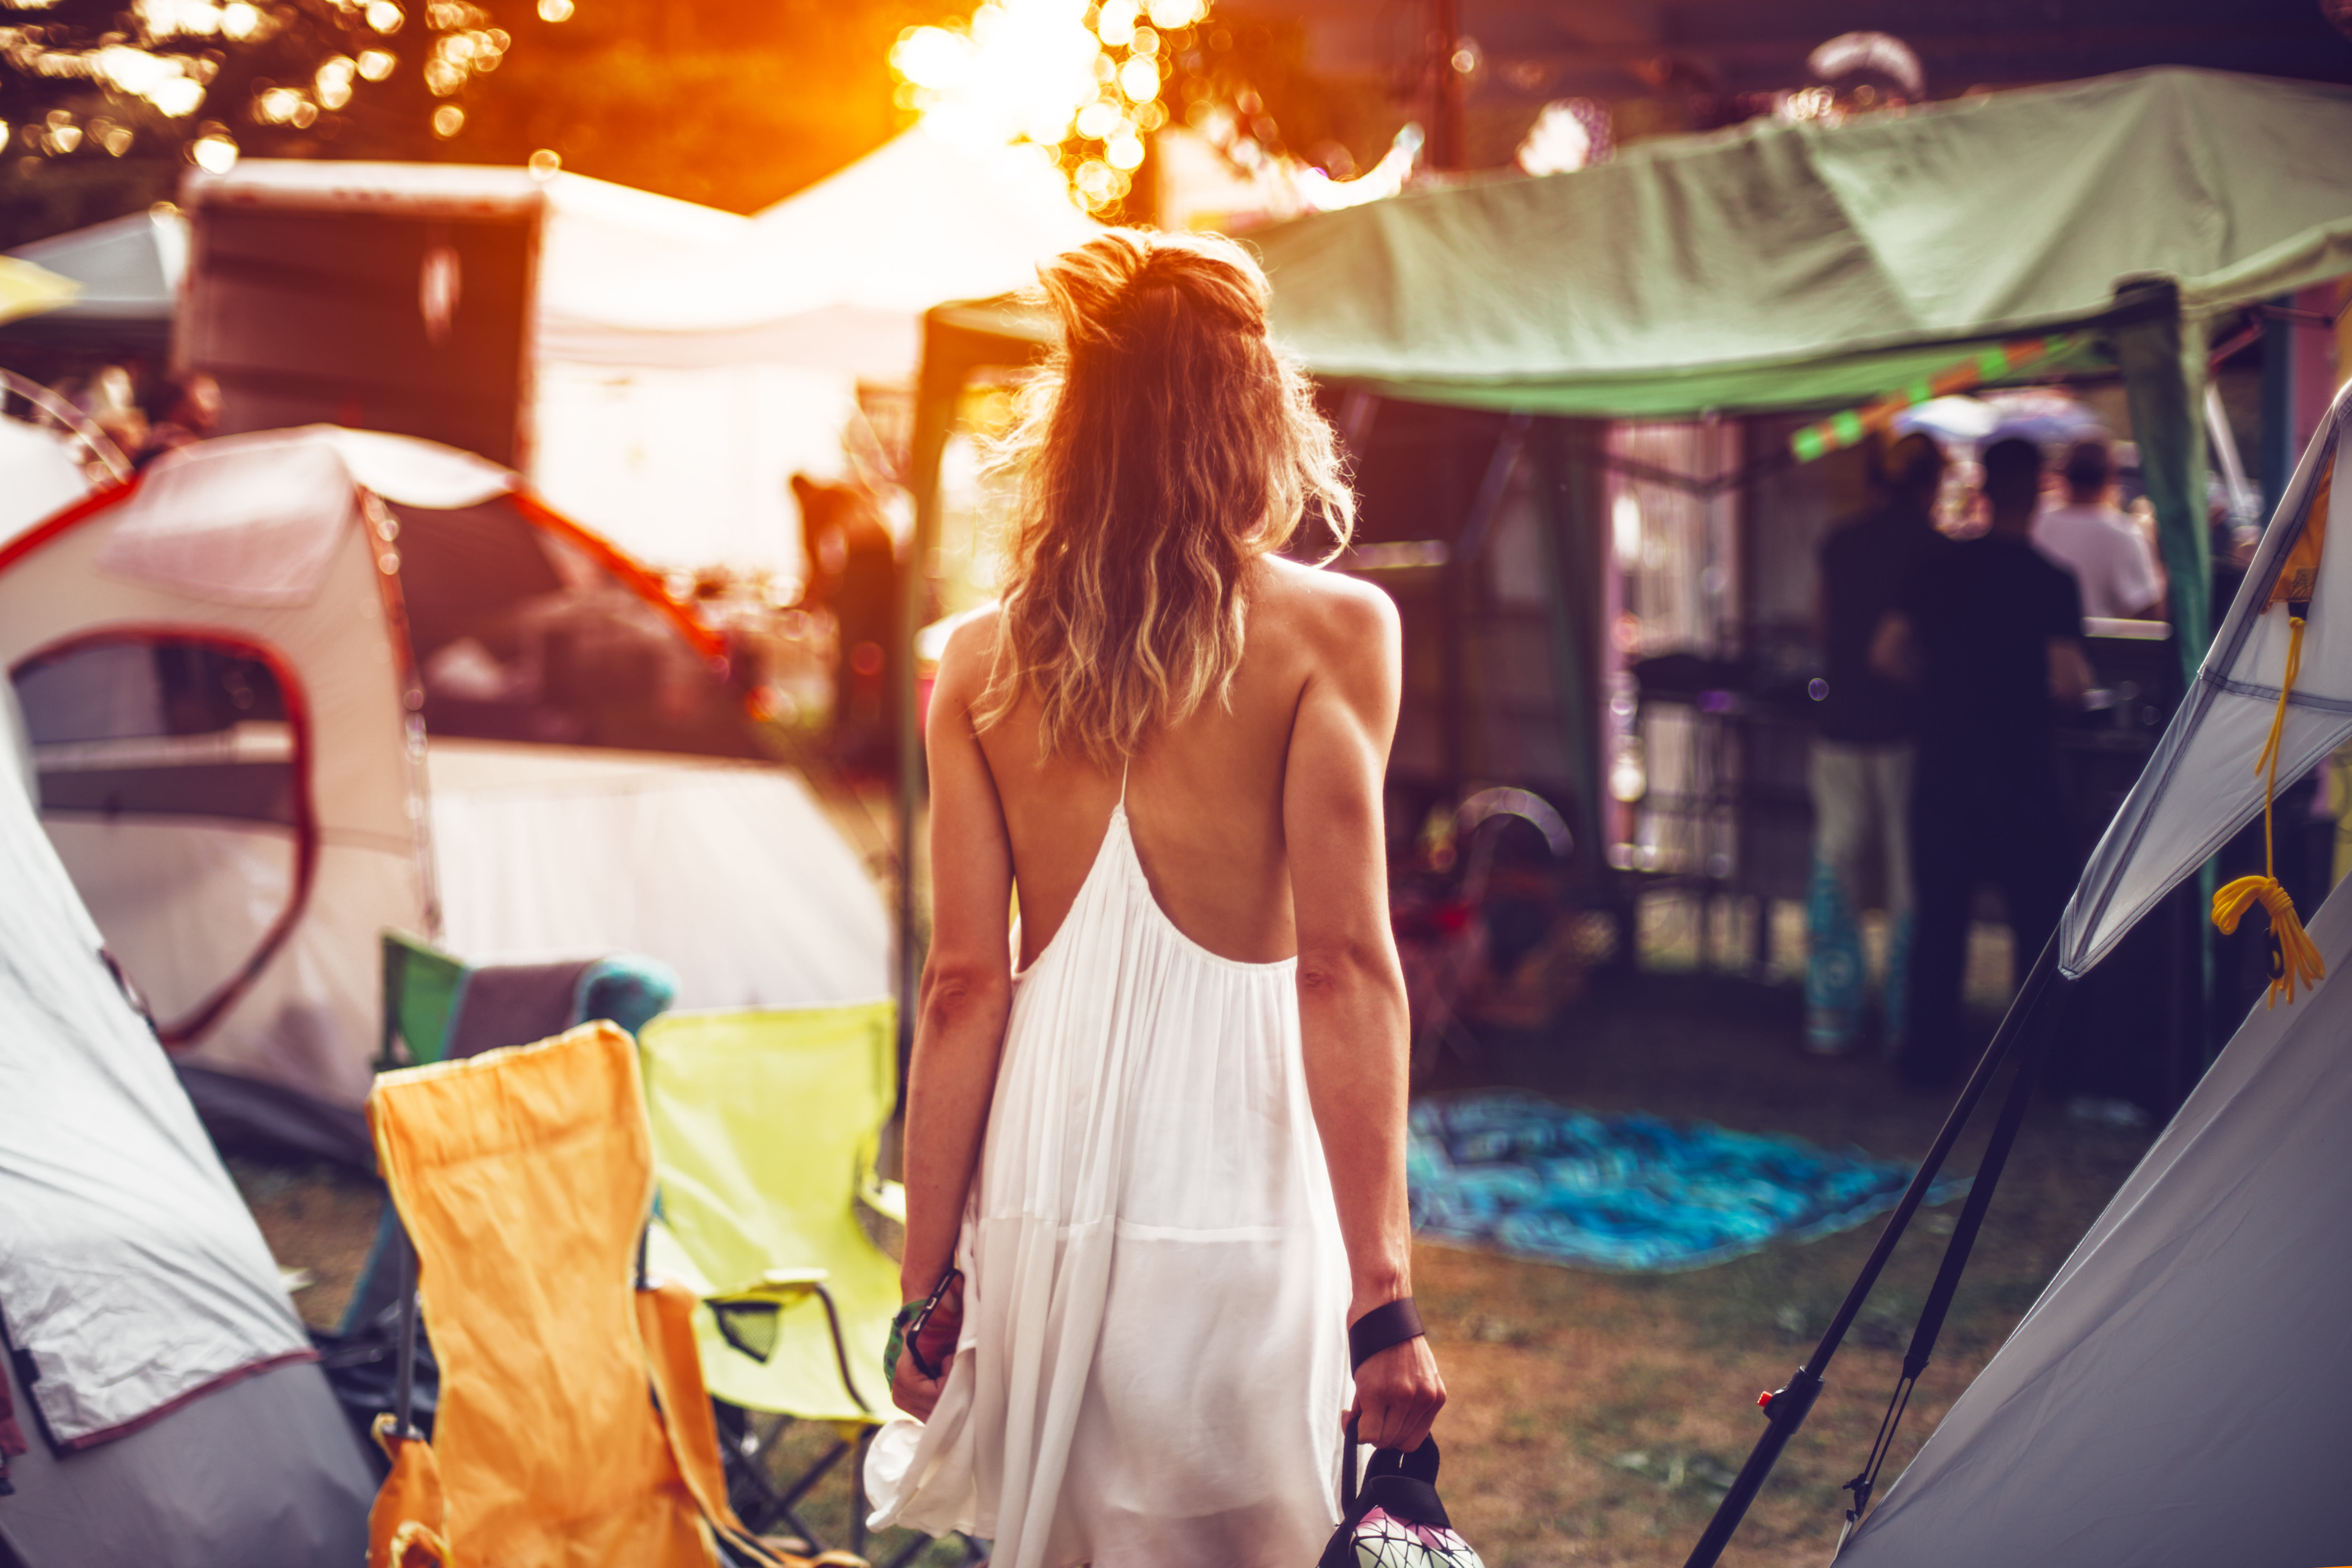 Festival camping zonsondergang. Foto: AdobeStock / janifest